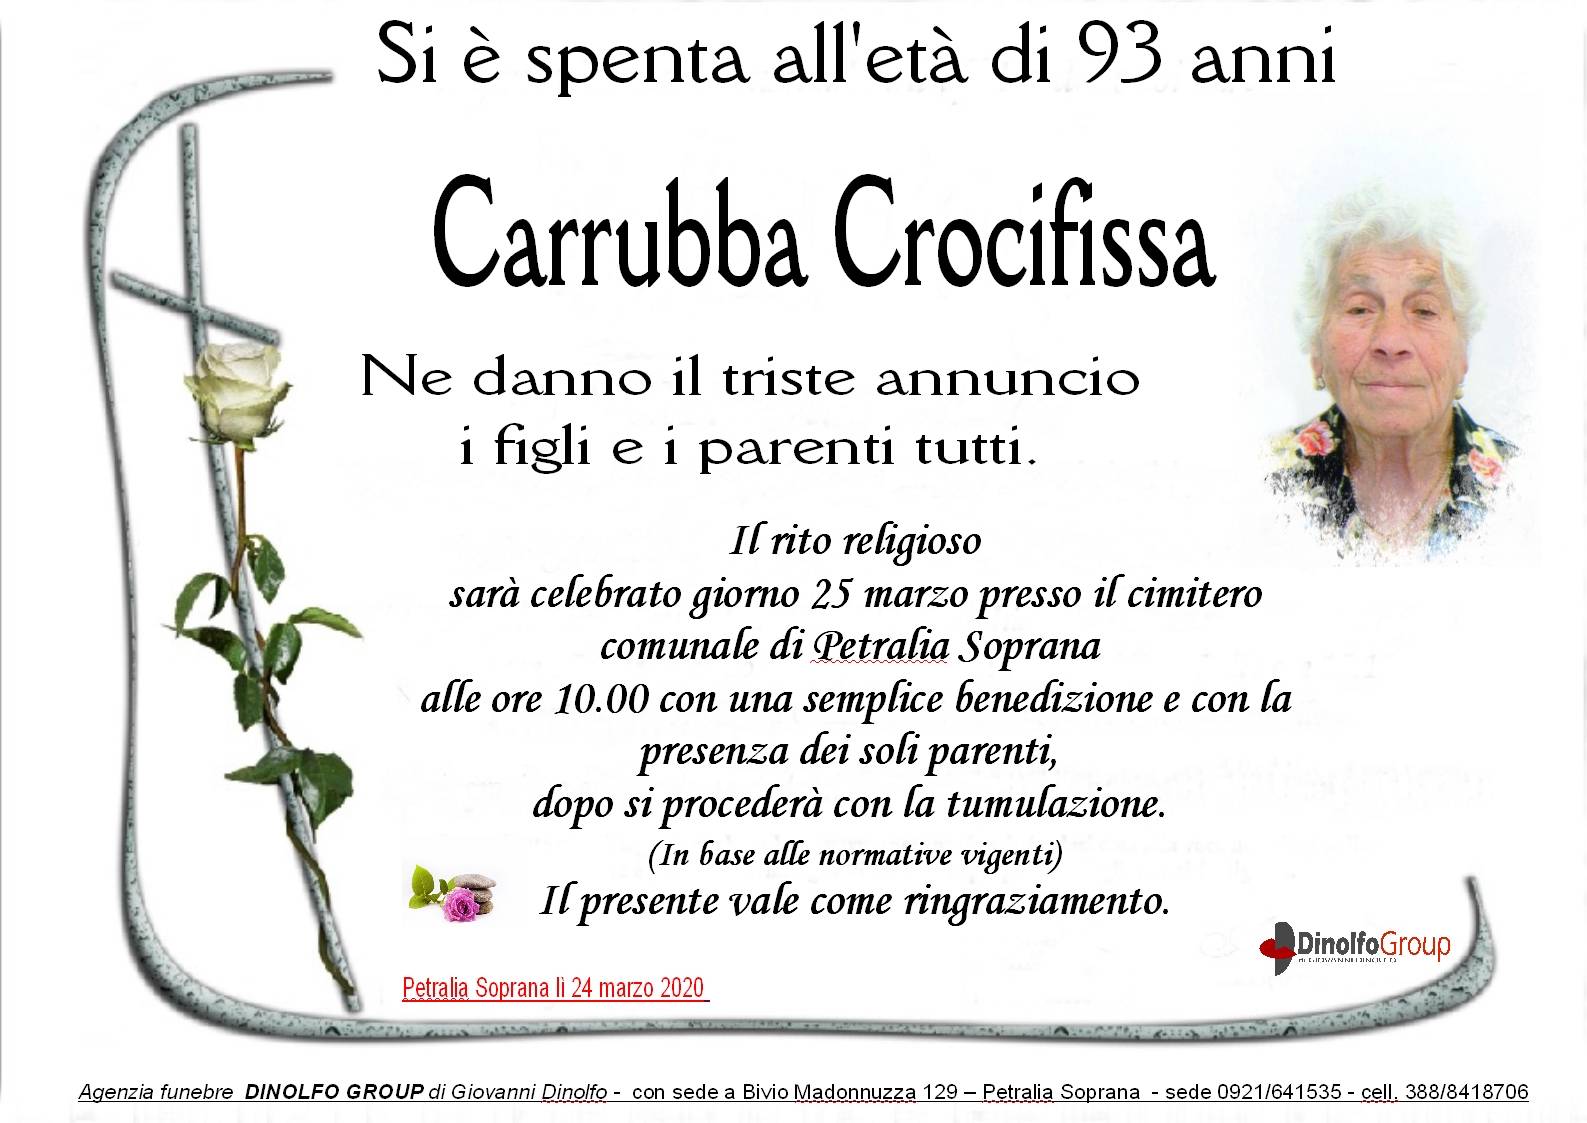 Crocifissa Carrubba